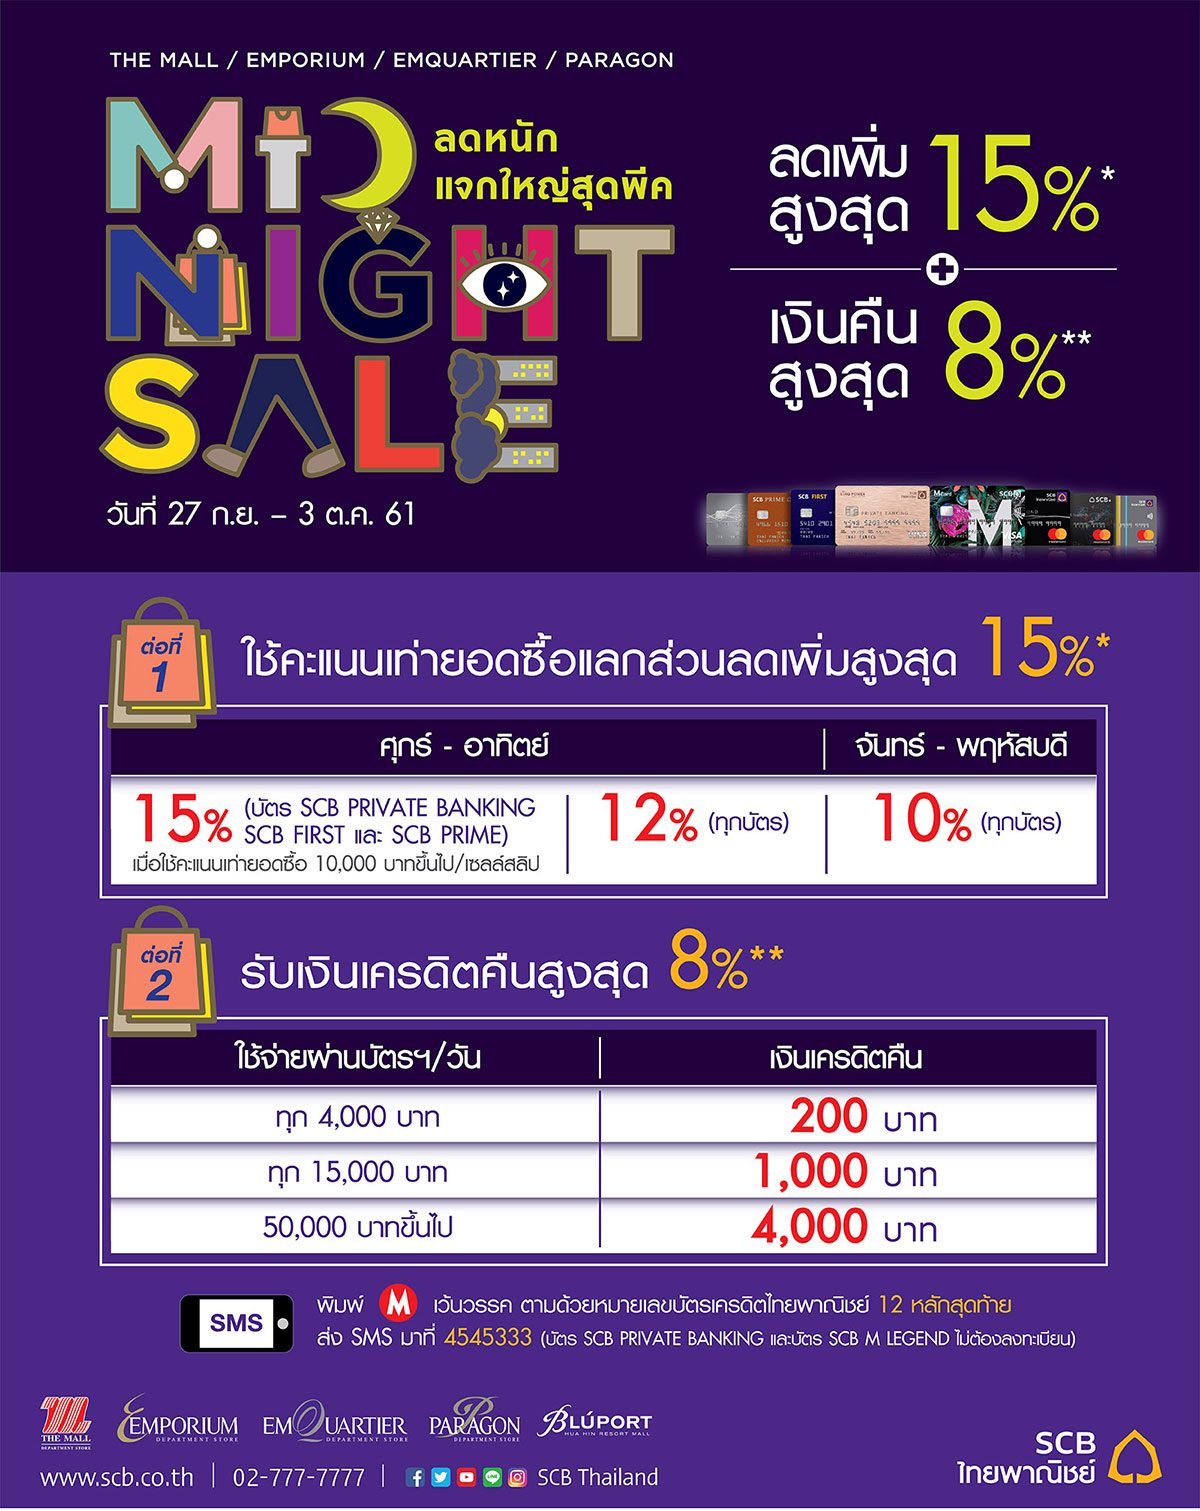 Midnight Sale